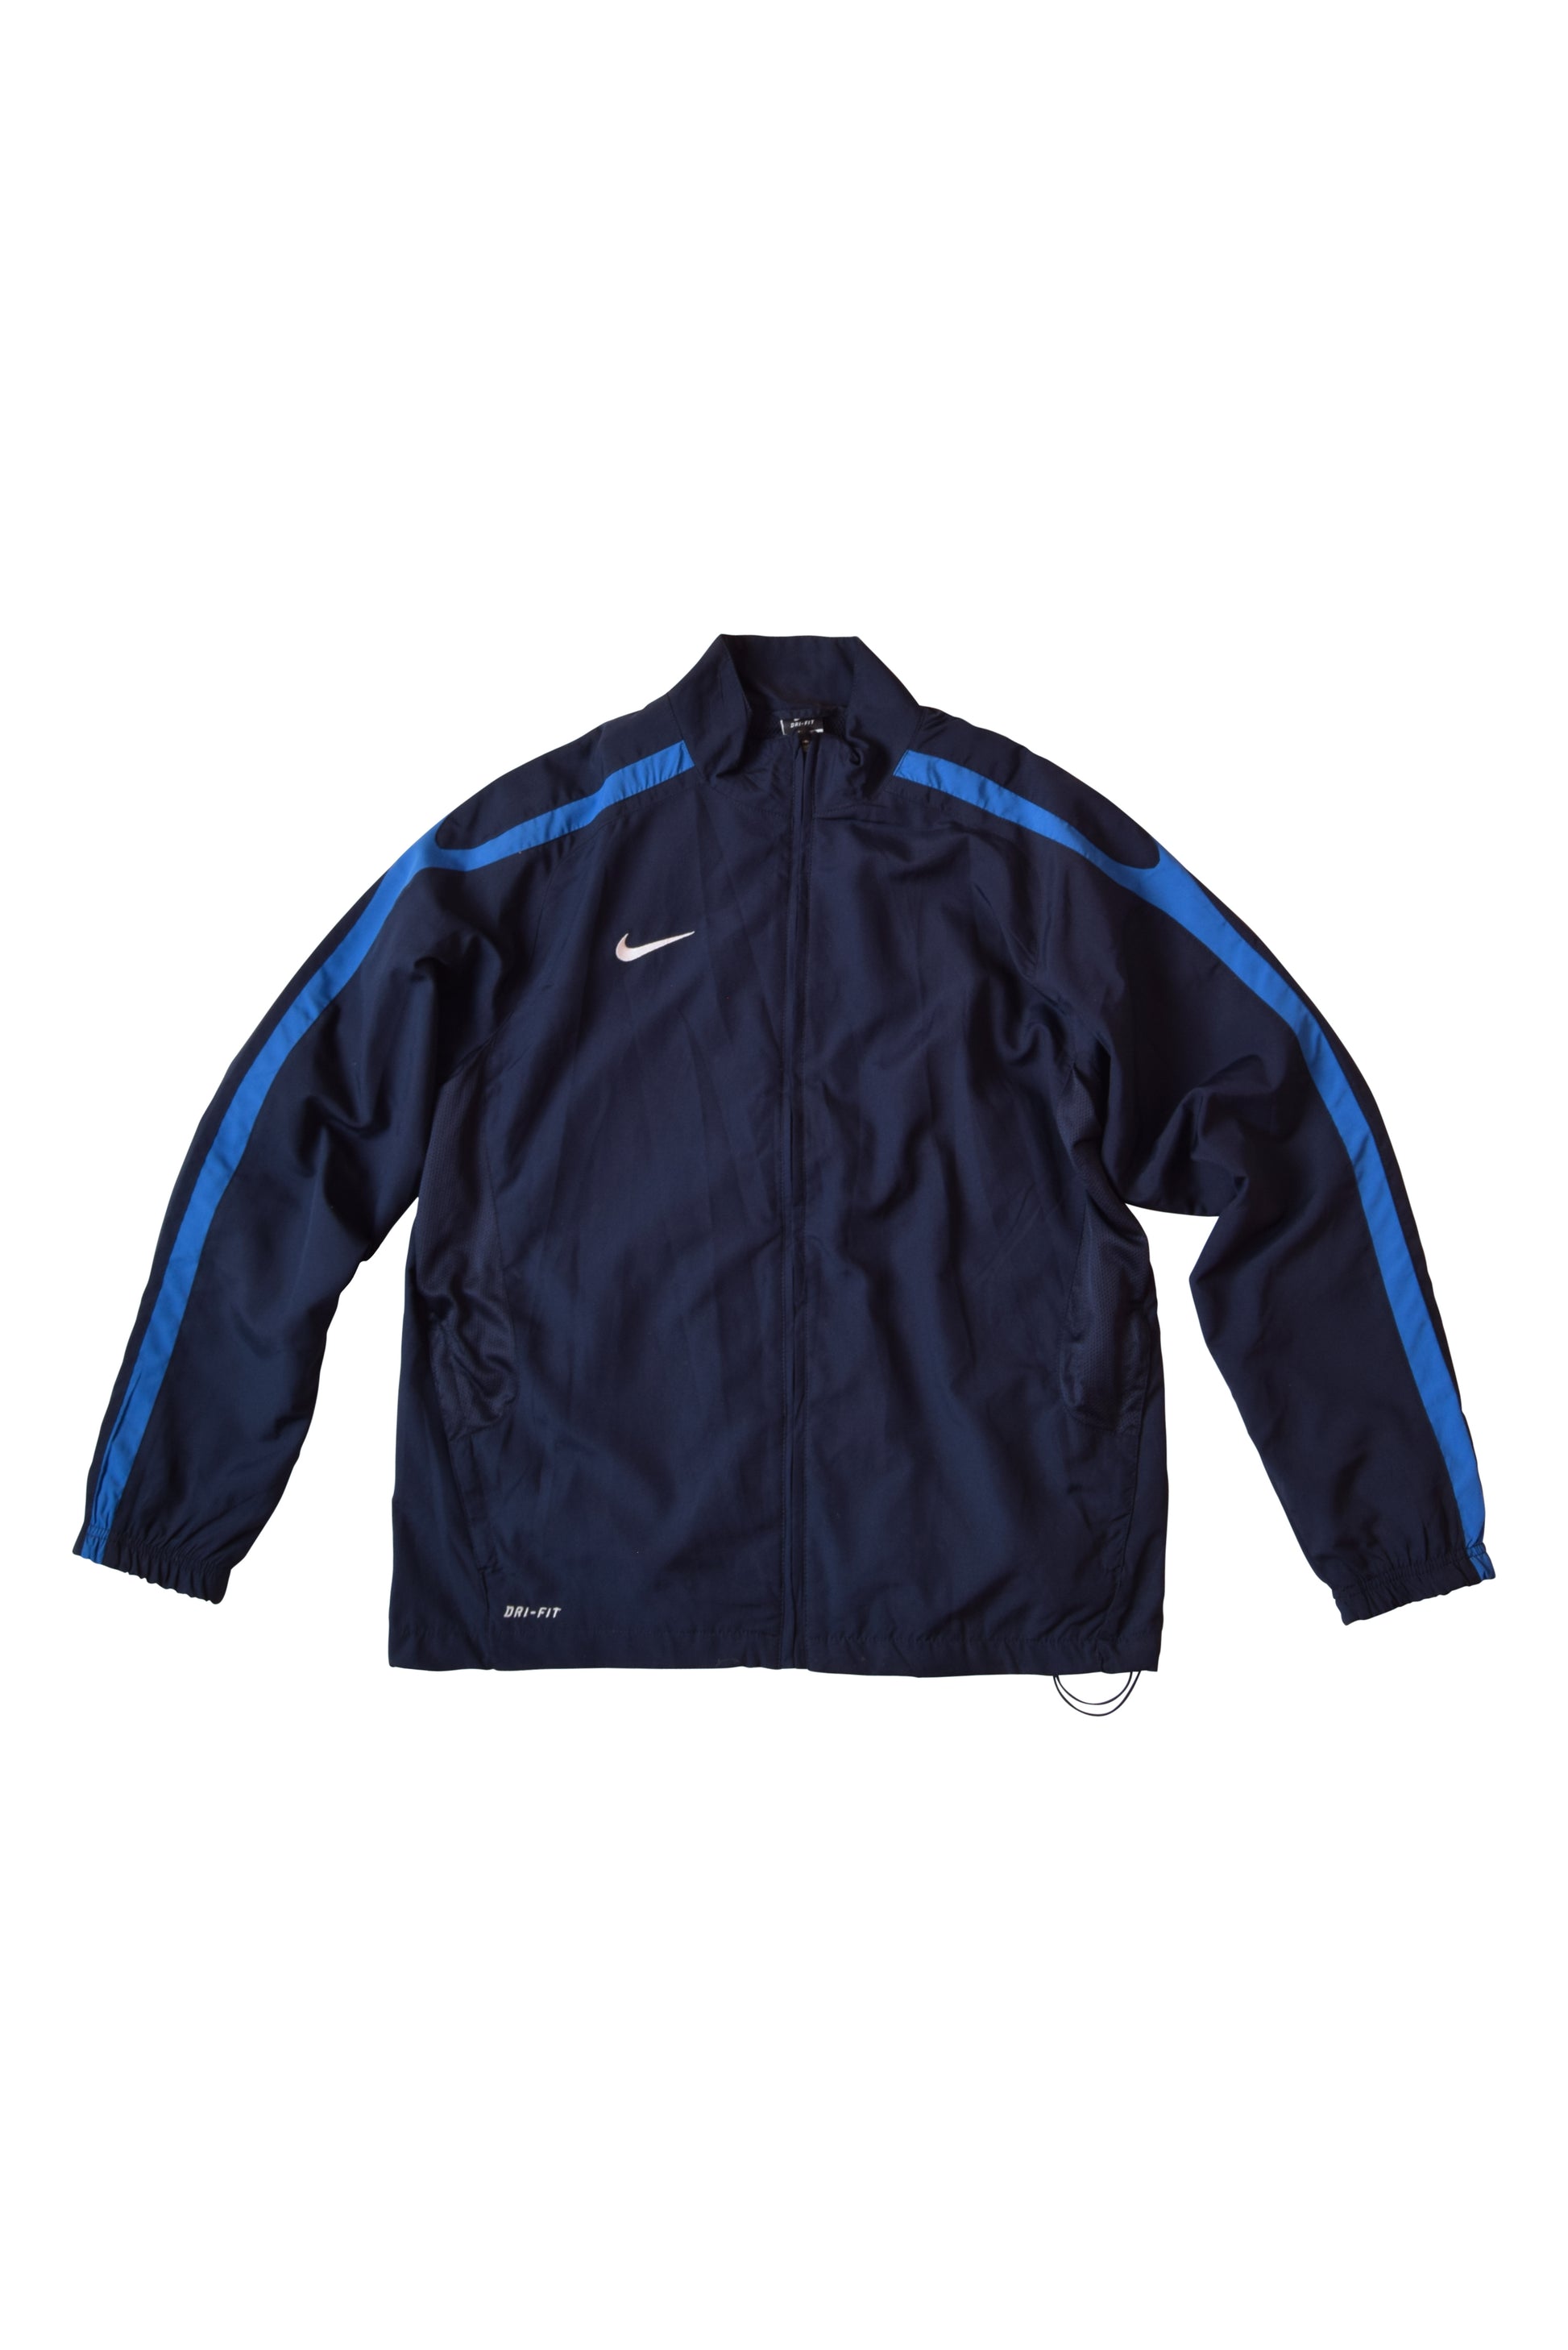 Nike Jacket '00 DRI-FIT Size XL 